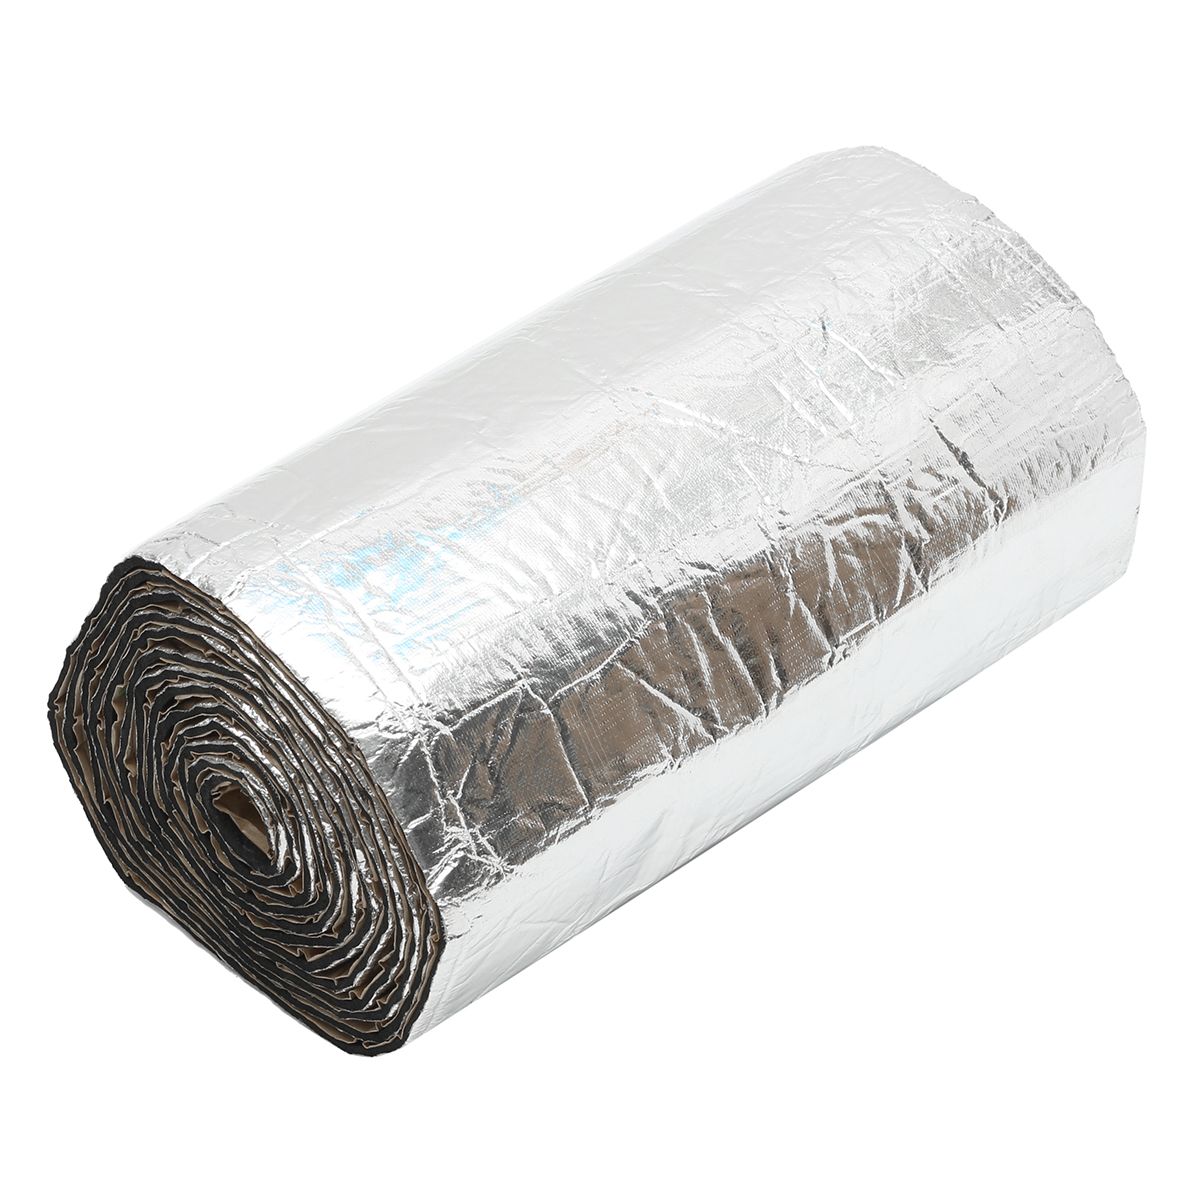 7mm-Car-Sound-Deadener-Heat-Shield-Insulation-Aluminum-Foil-Material-Sound-Insulation-Cotton-1298866